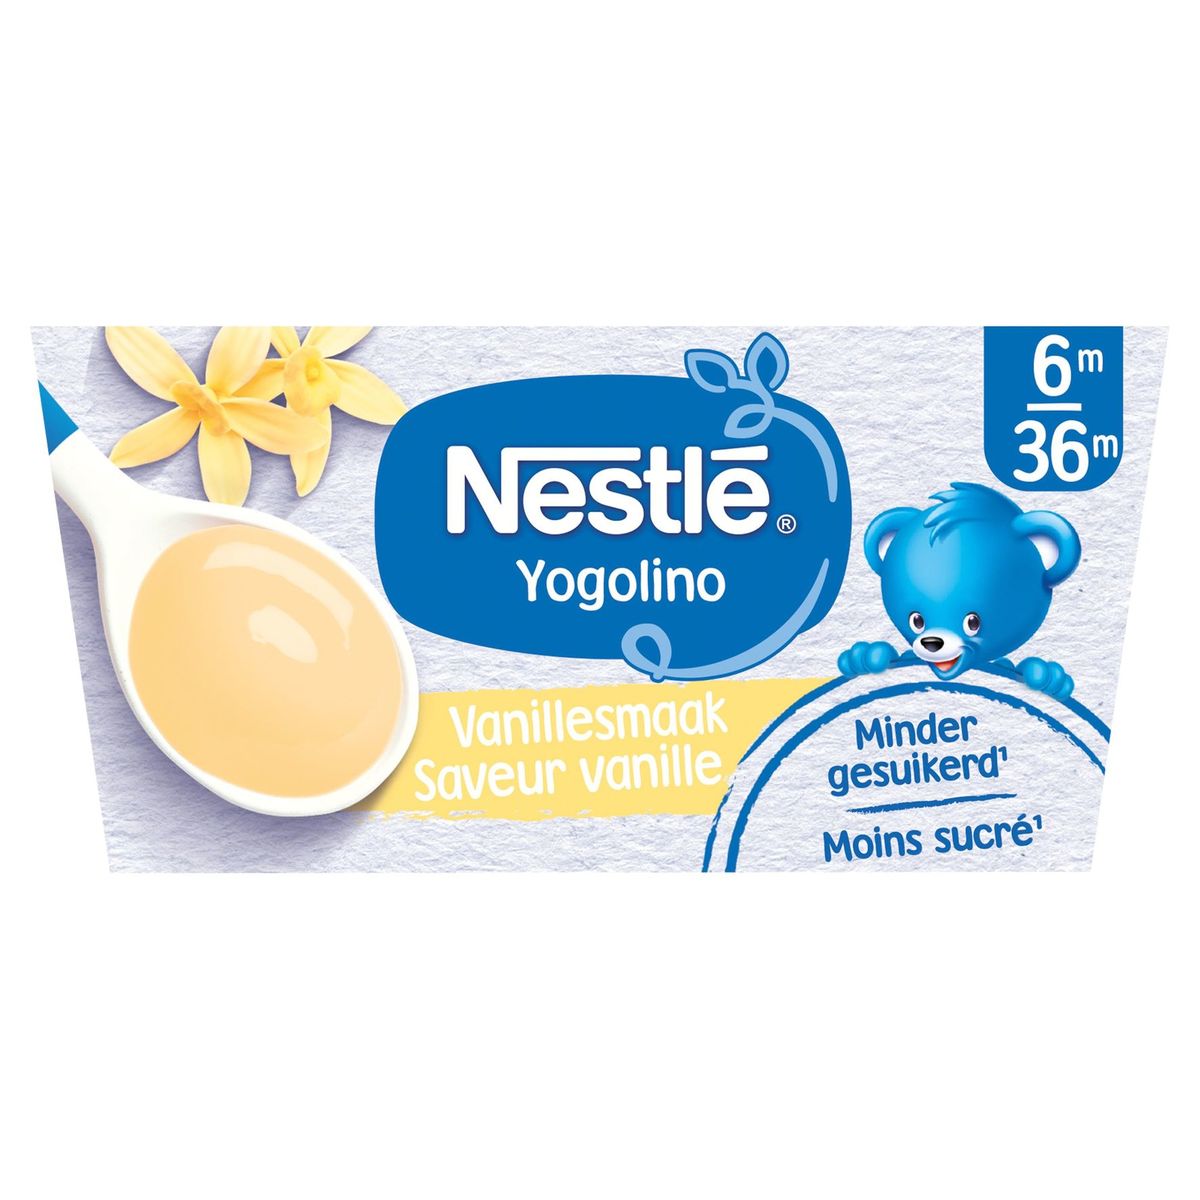 Nestlé Yogolino Vanillesmaak 4 x 100g